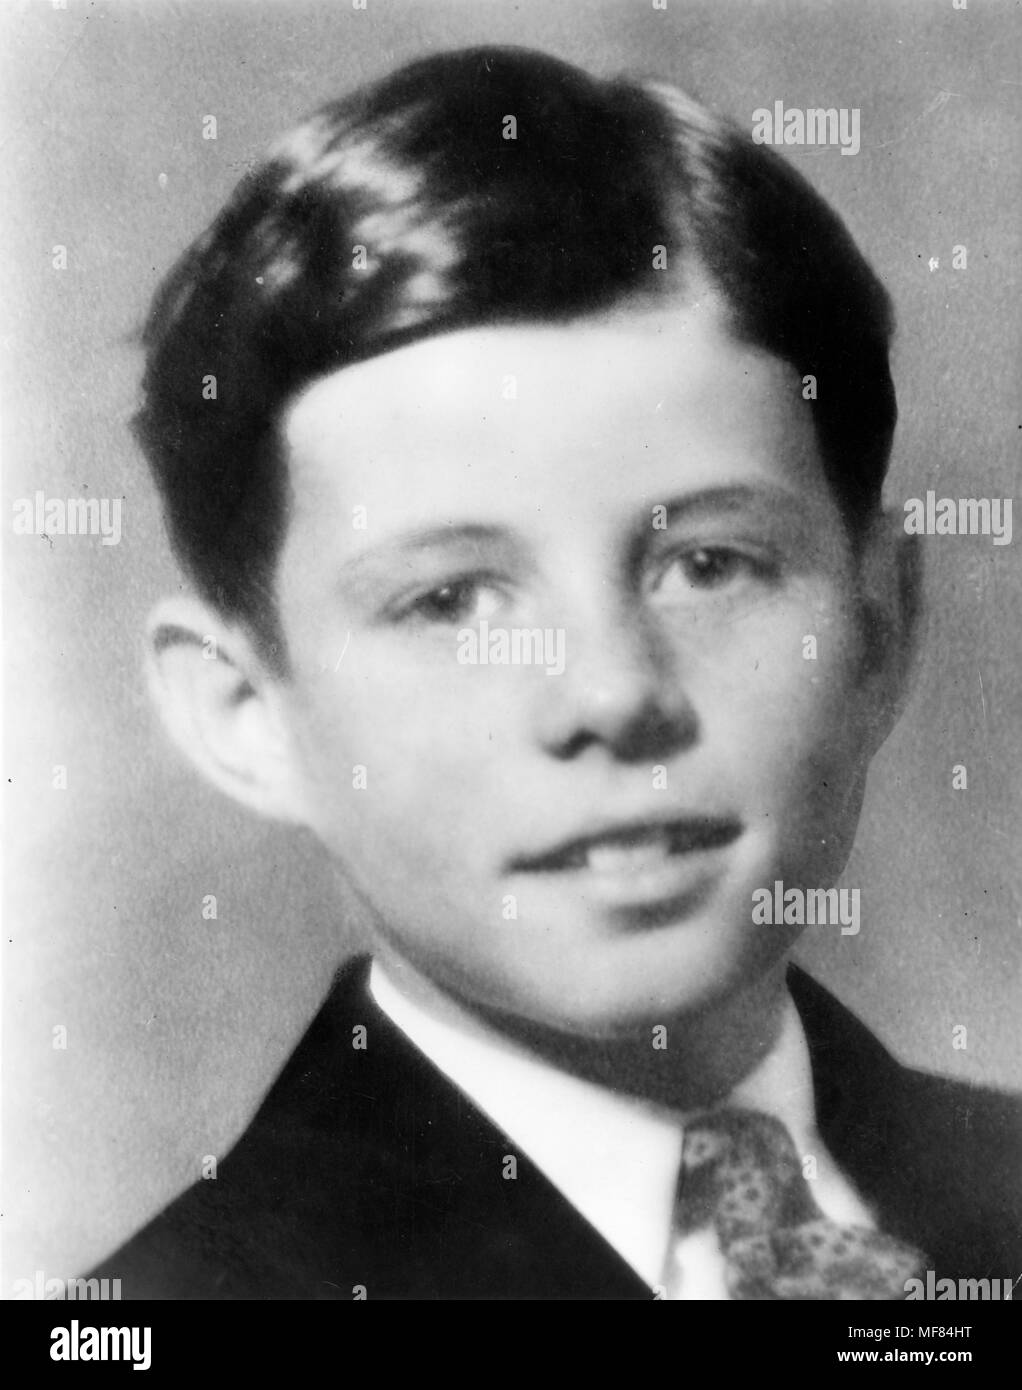 PC6     c. 1926/1927 Portrait of John F. Kennedy.  President John F. Kennedy as a boy. Please credit: John F. Kennedy Presidential Library and Museum, Boston. Stock Photo